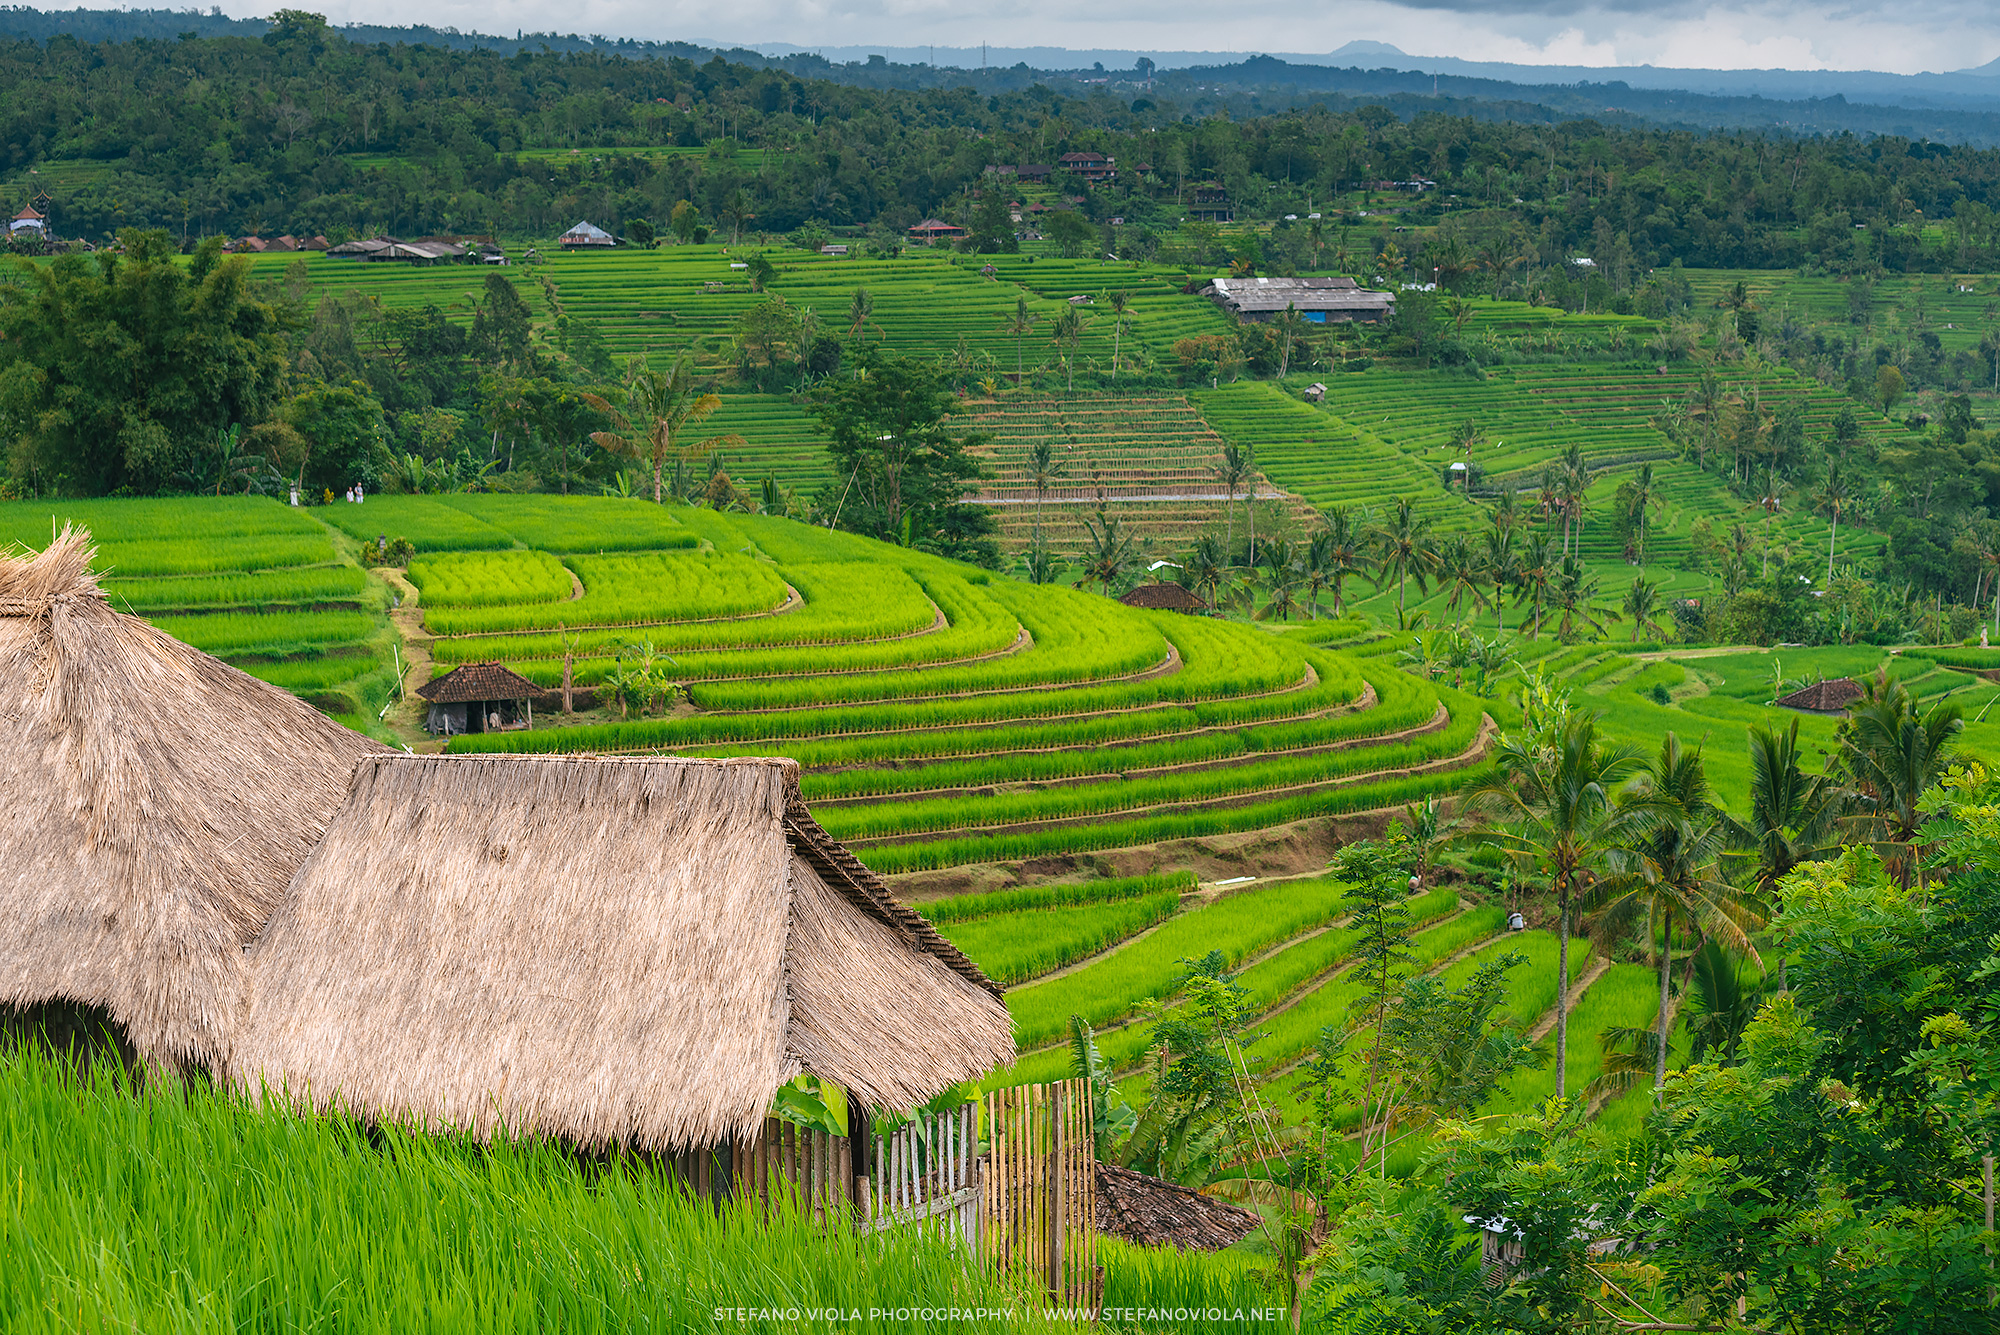 Le terrazza di riso di Jatiluwih (Bali)...